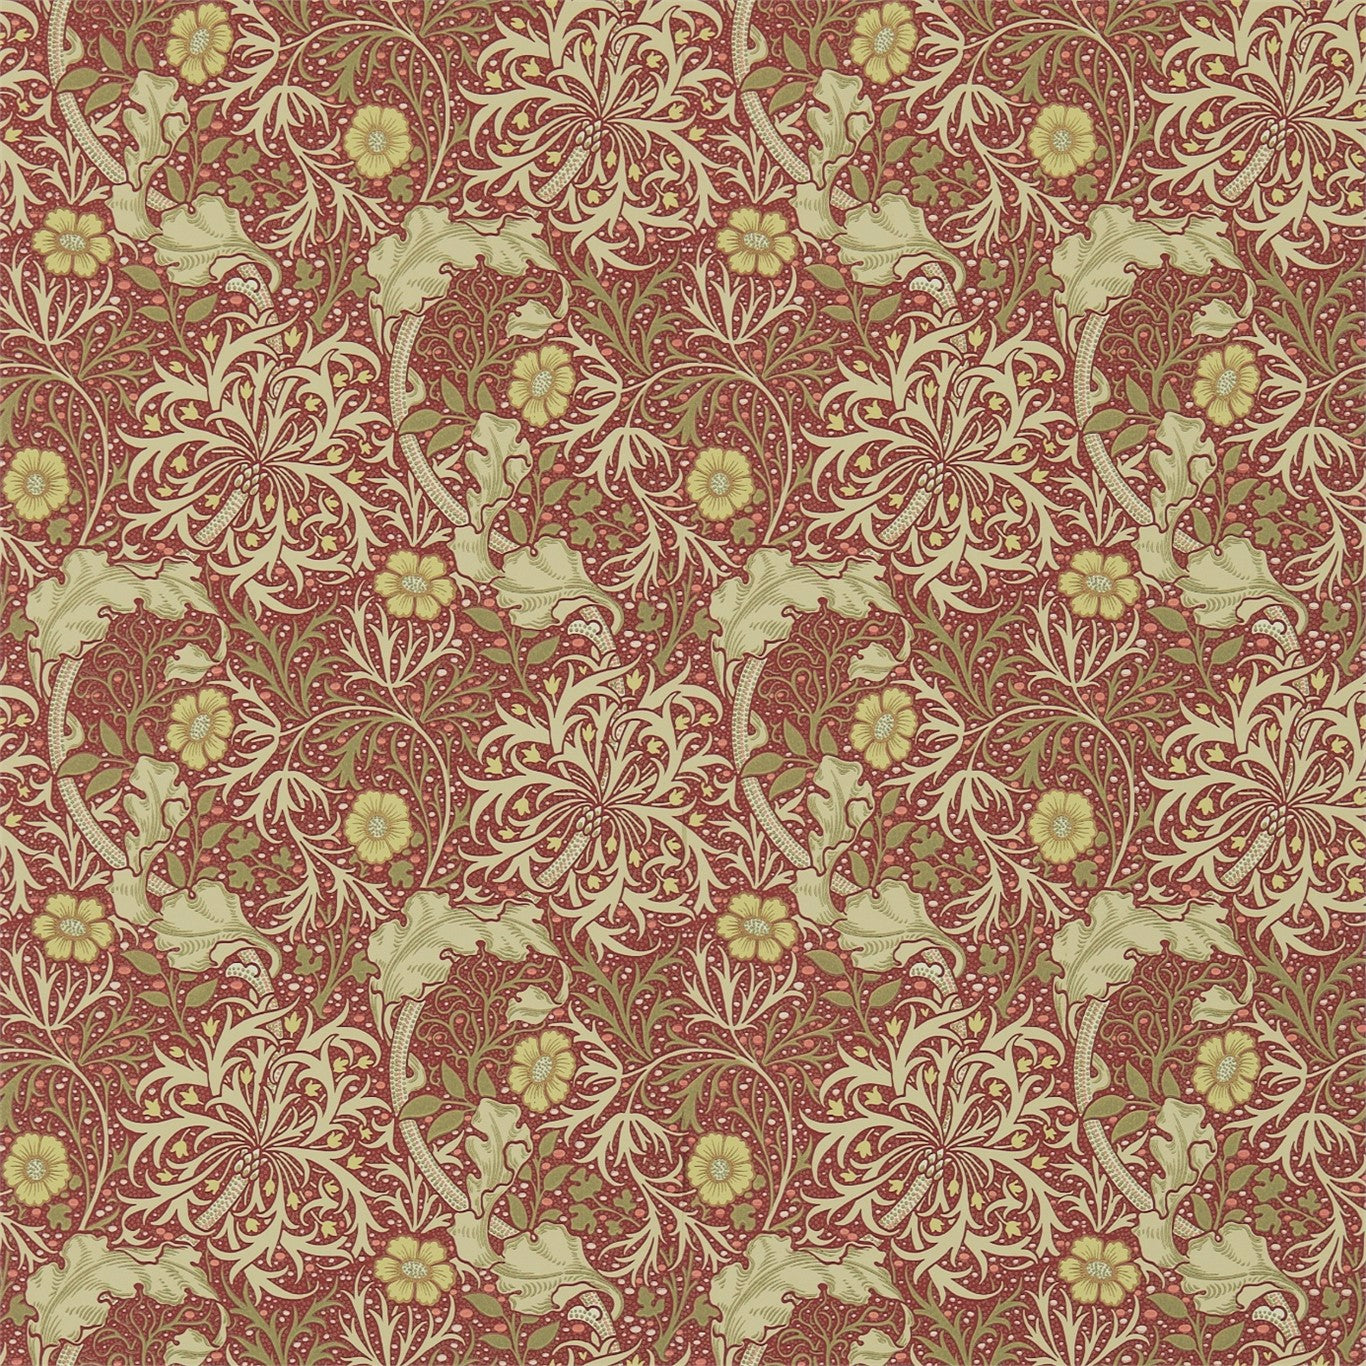 Morris Seaweed Red/Gold Wallpaper DMCR216469 by Morris & Co